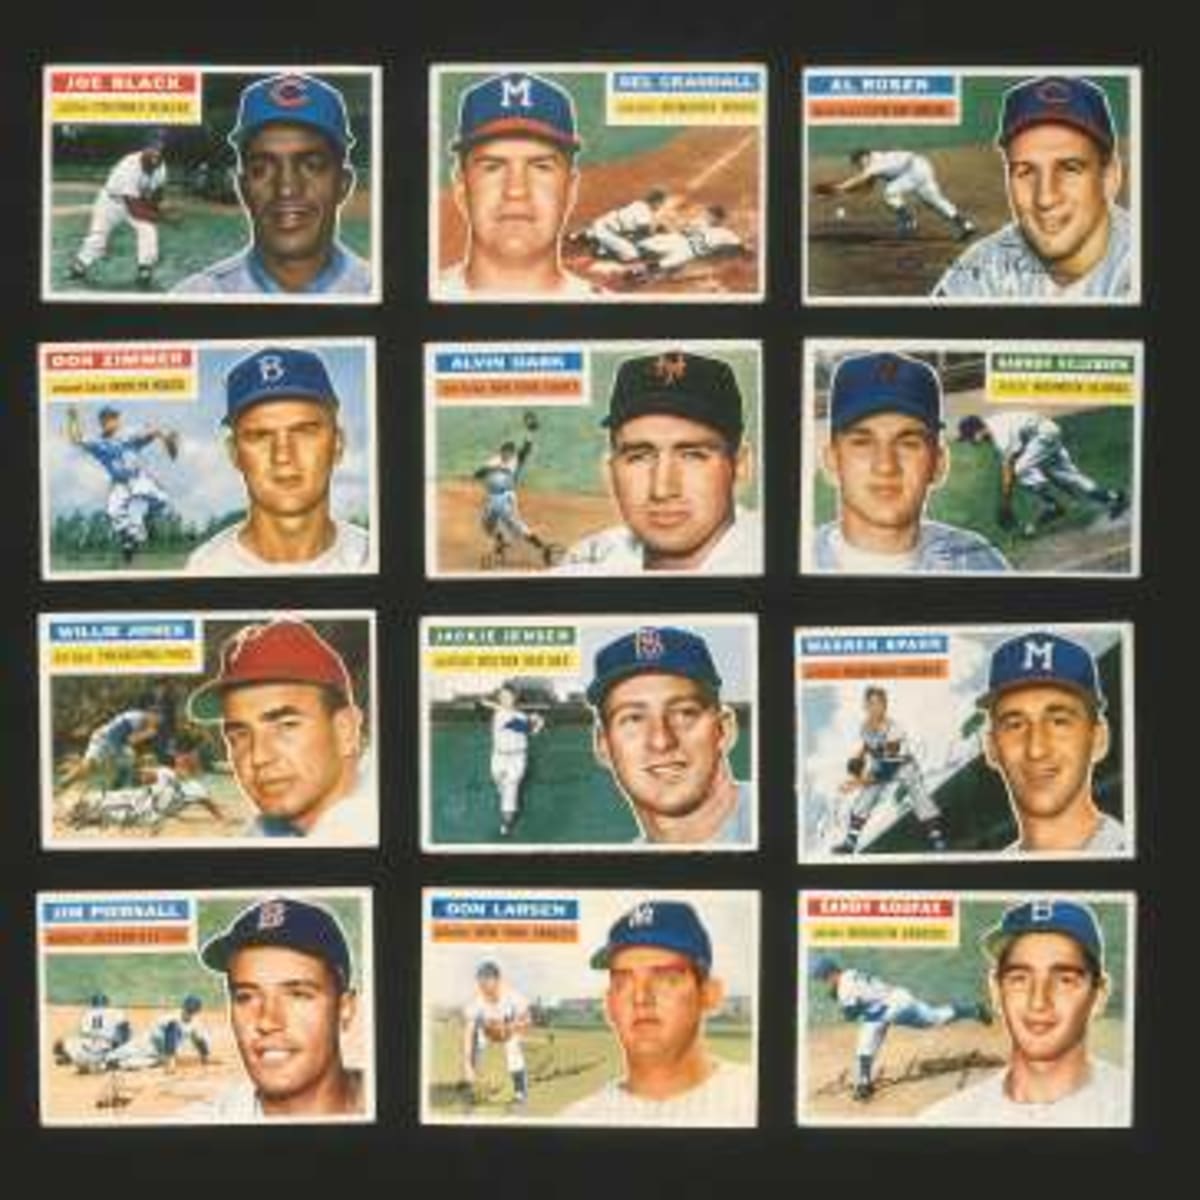 Luis Aparicio -1967 Topps Card - Graded 9.8 - Baseball Card - gorgeous card